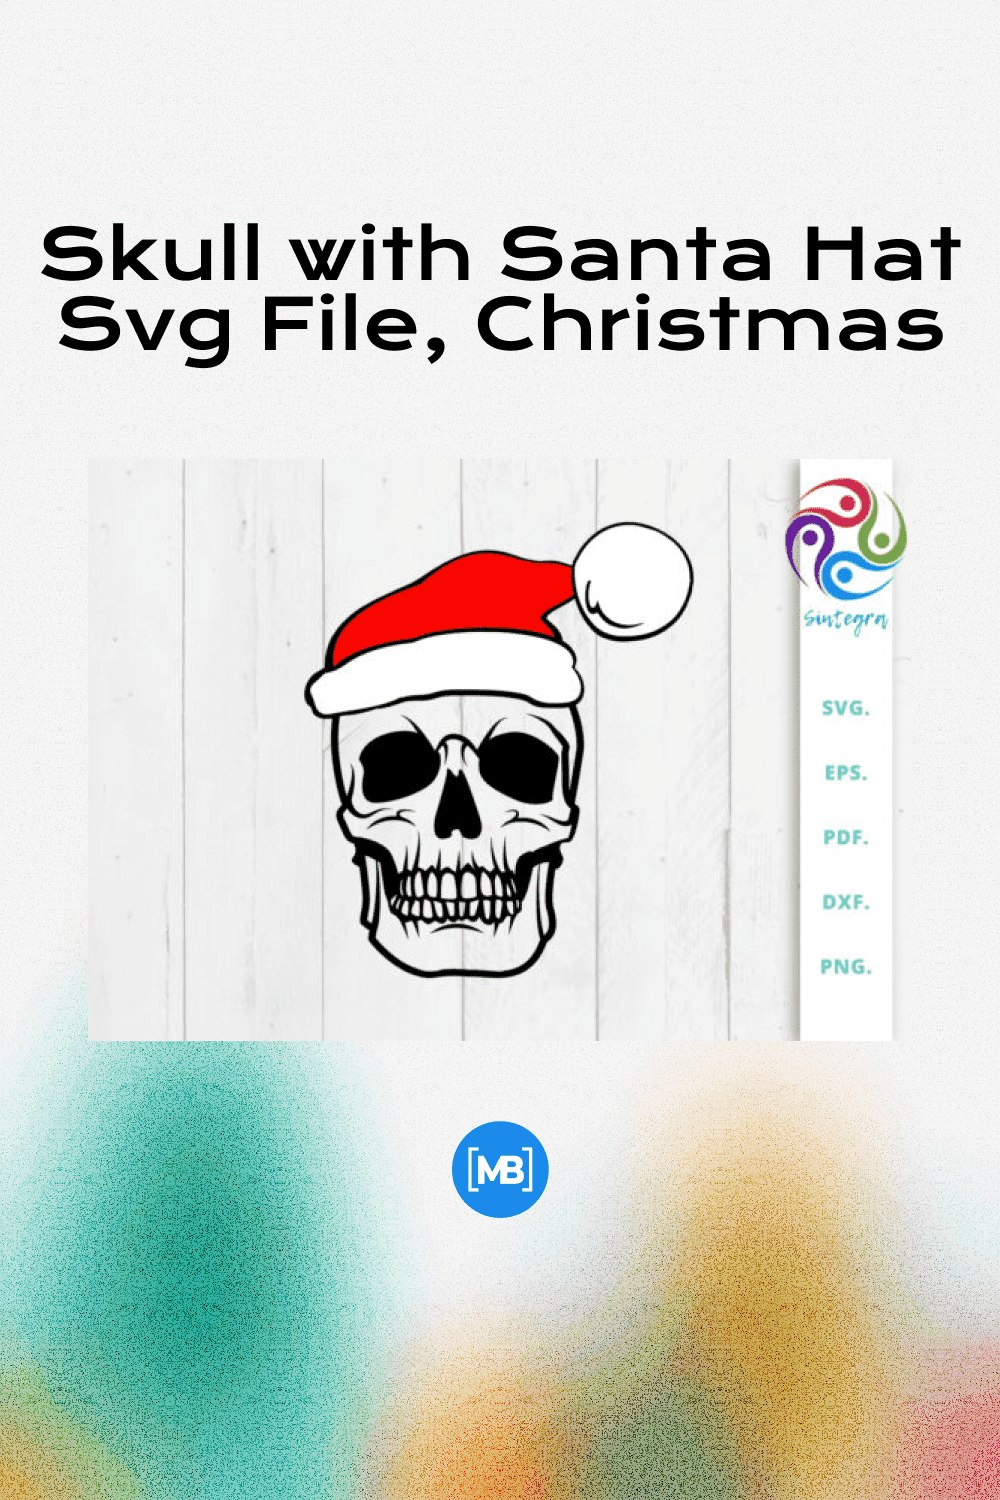 Skull with Santa Hat Svg File, Christmas.